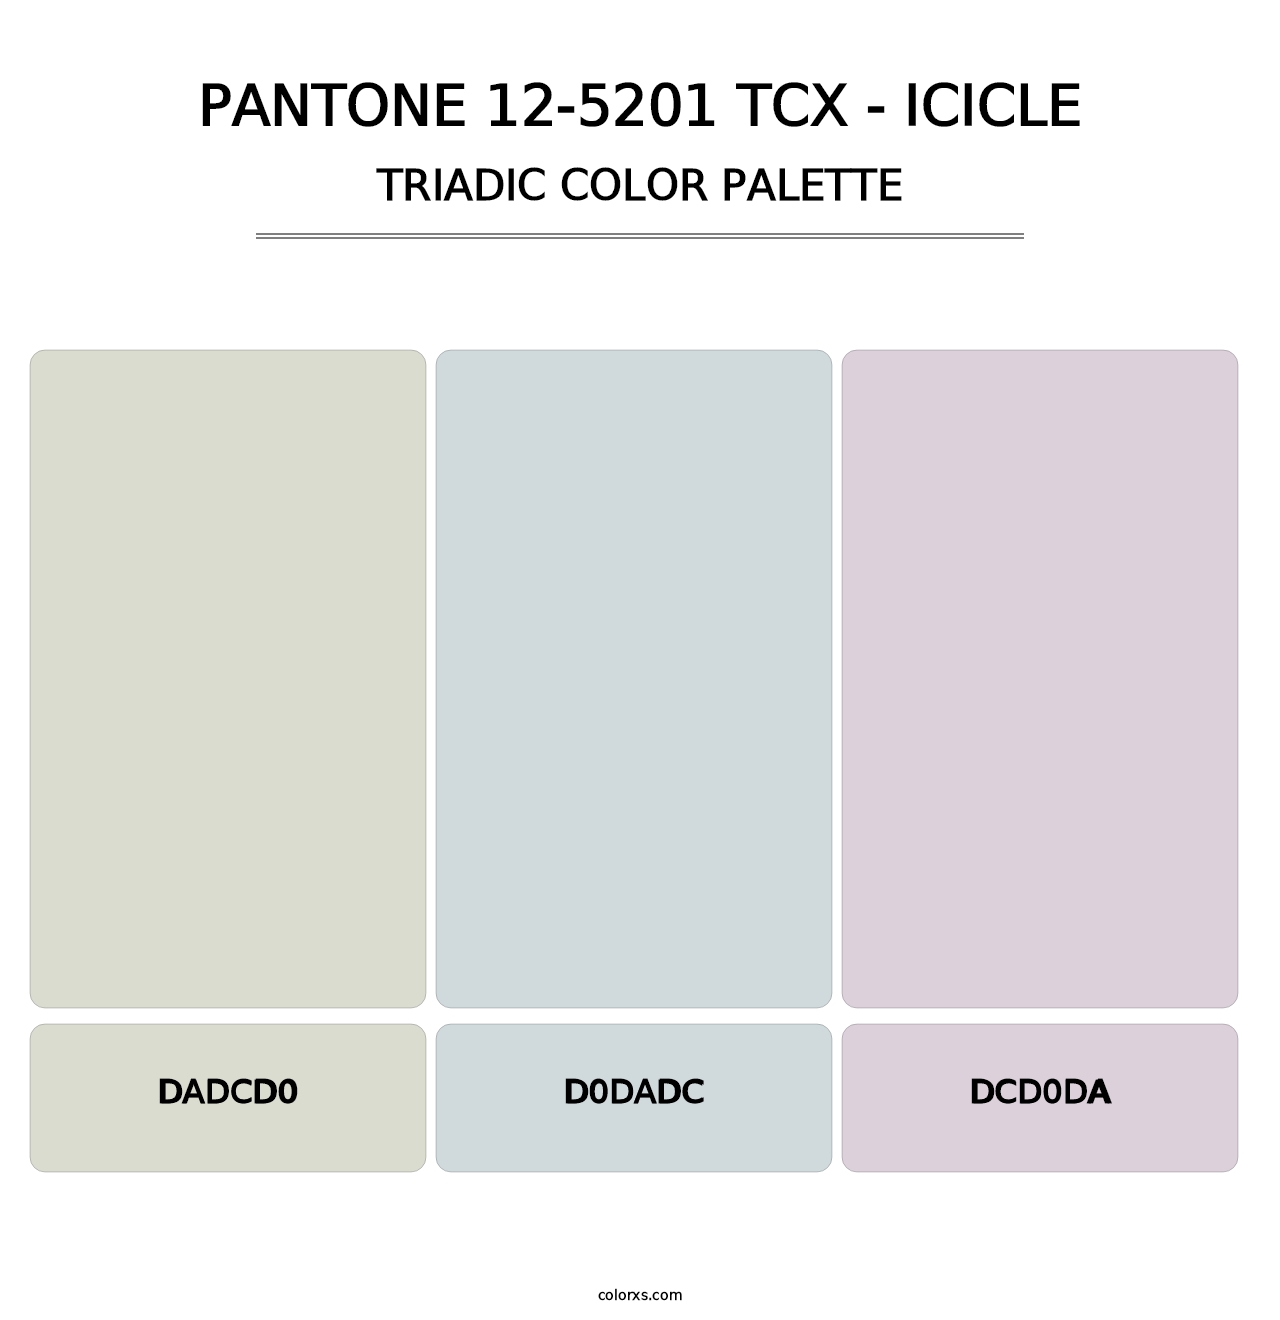 PANTONE 12-5201 TCX - Icicle - Triadic Color Palette